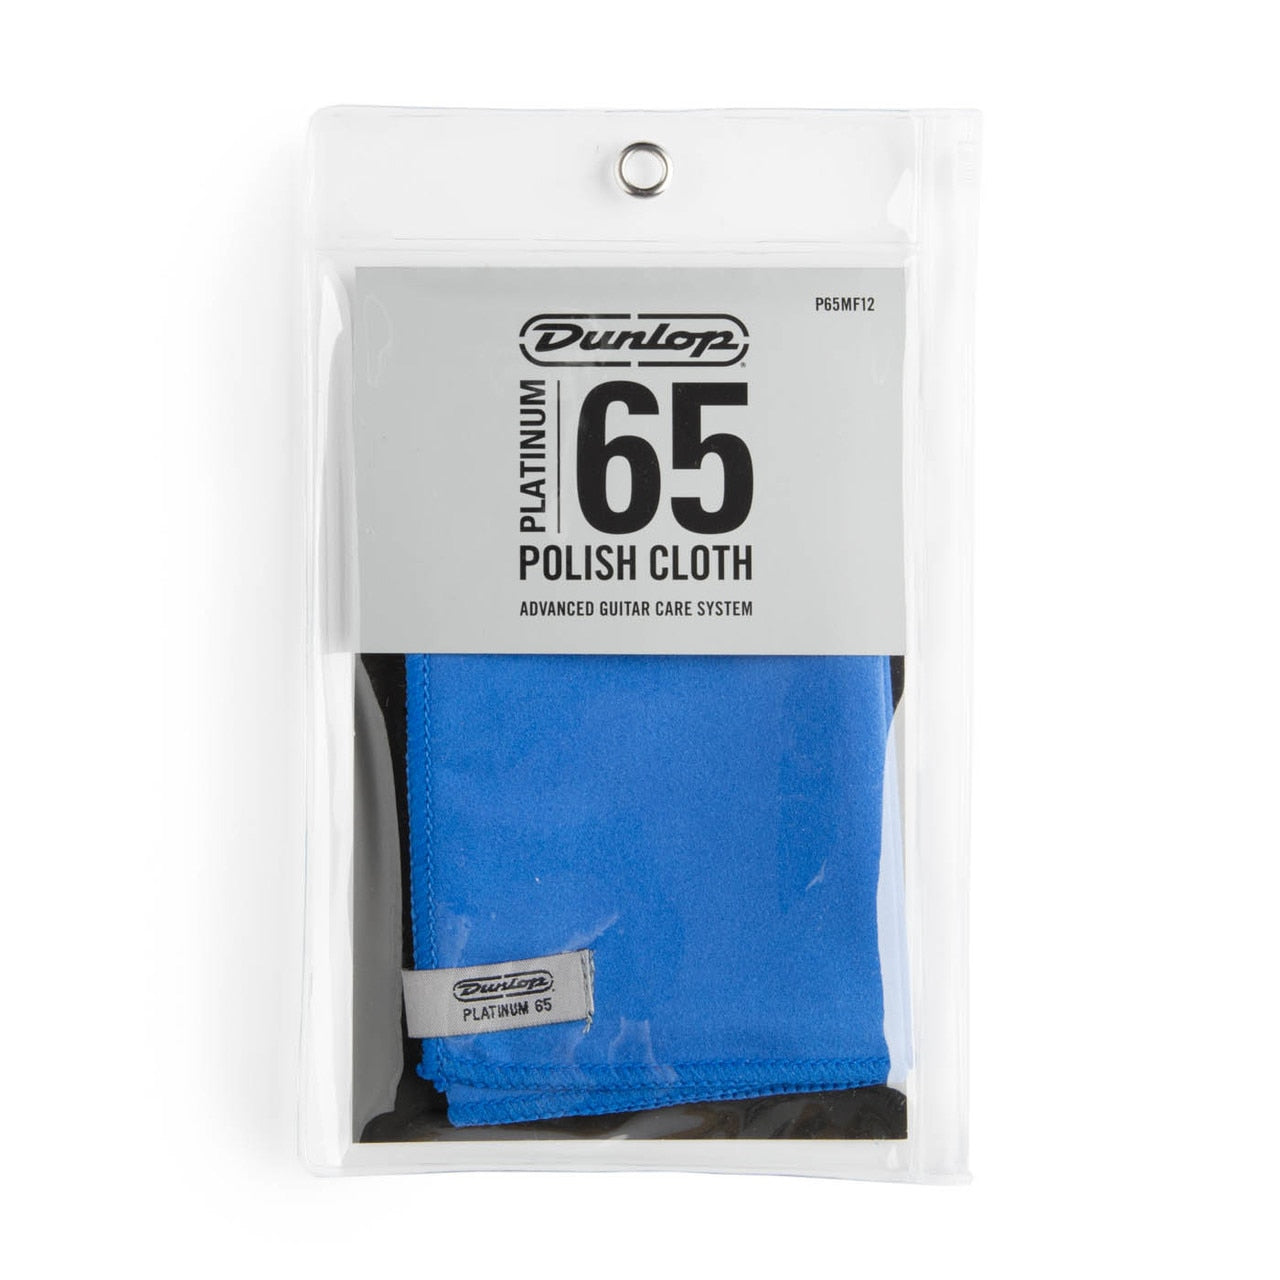 DUNLOP P65MF12 Platinum 65 Microfiber Cloth